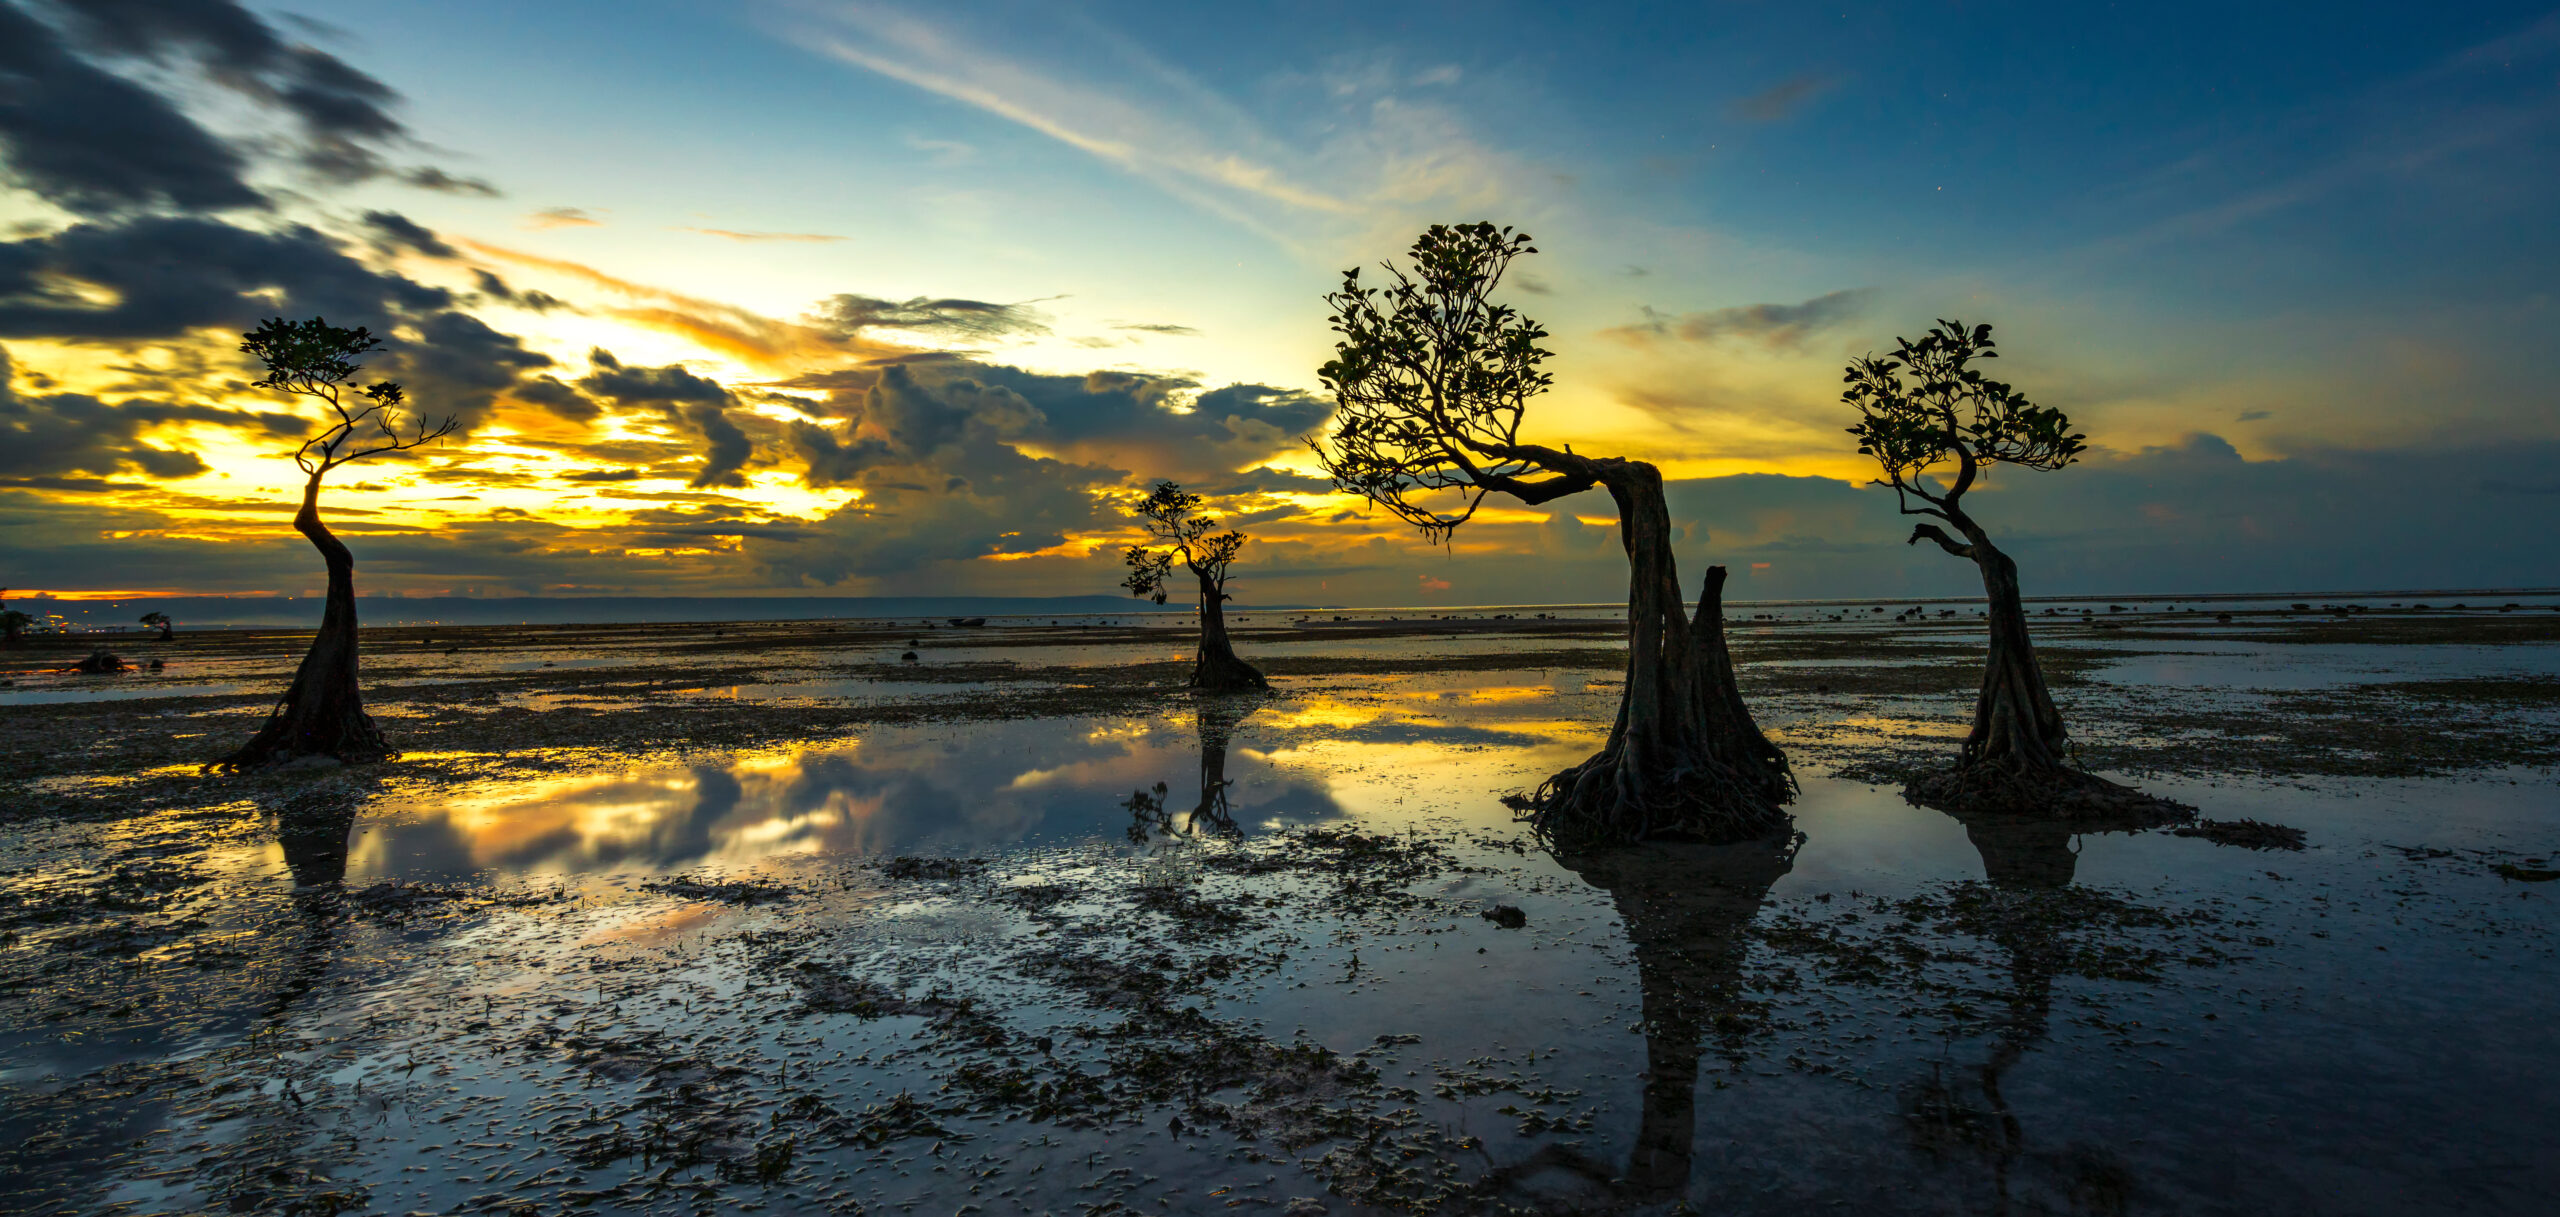 Beach with sunset background at Walakiri, Sumba Island, Indonesia.